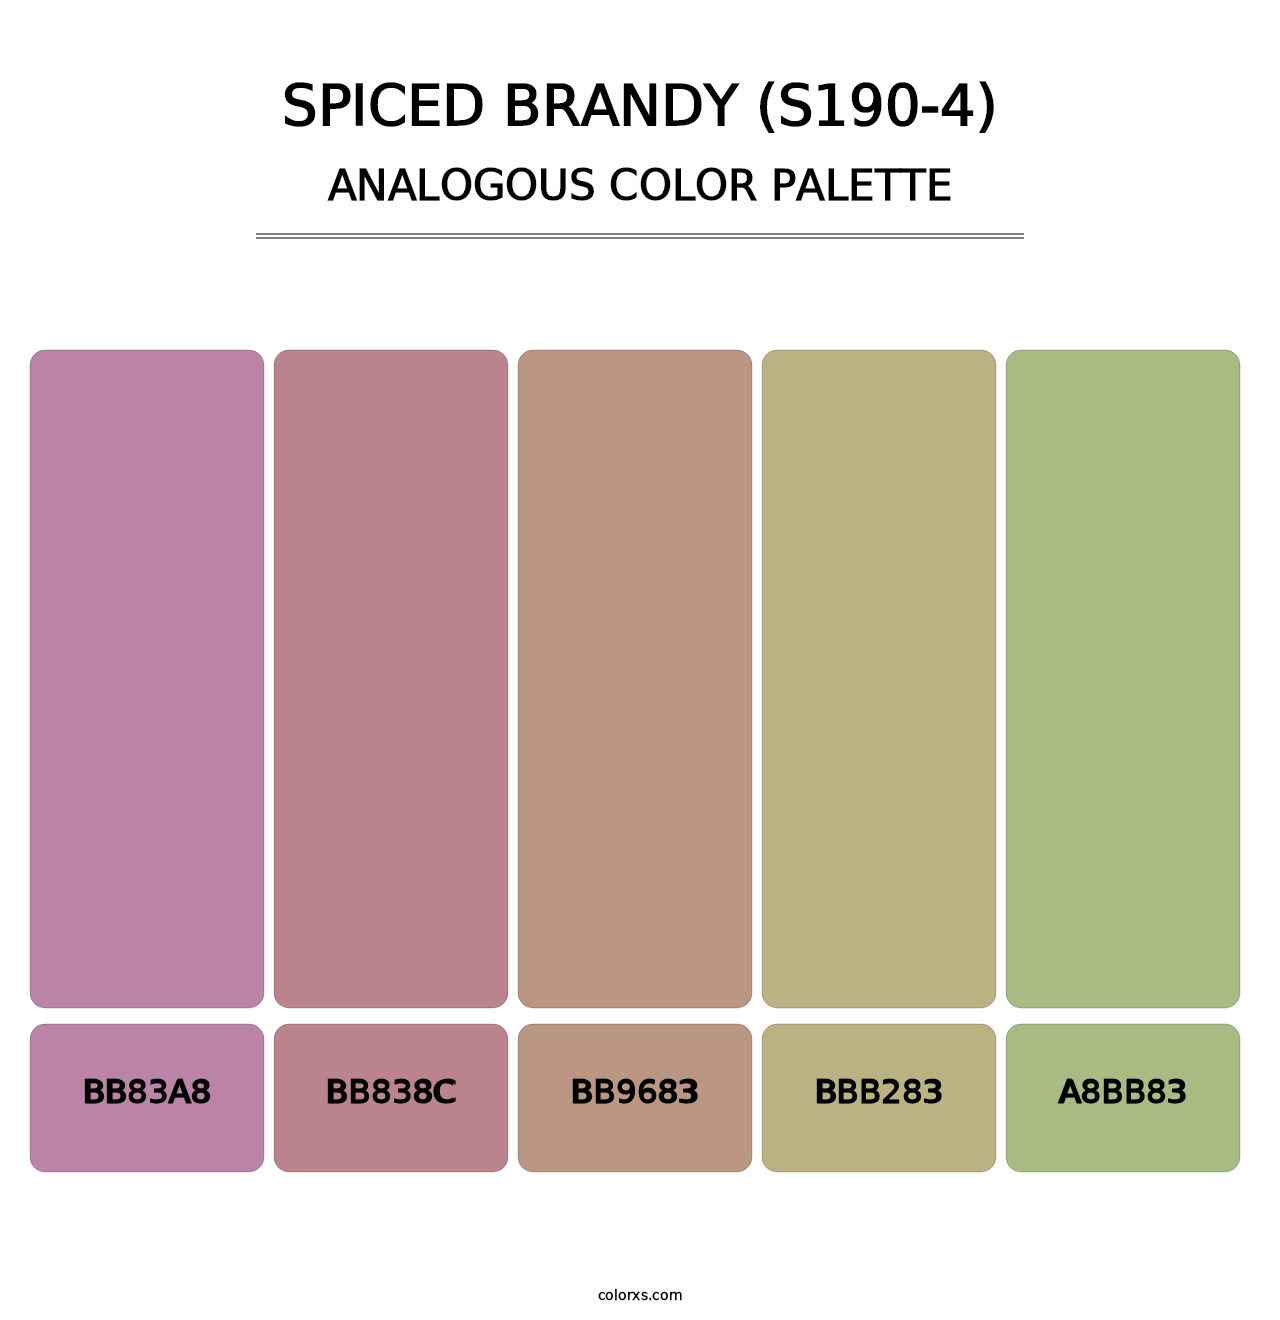 Spiced Brandy (S190-4) - Analogous Color Palette